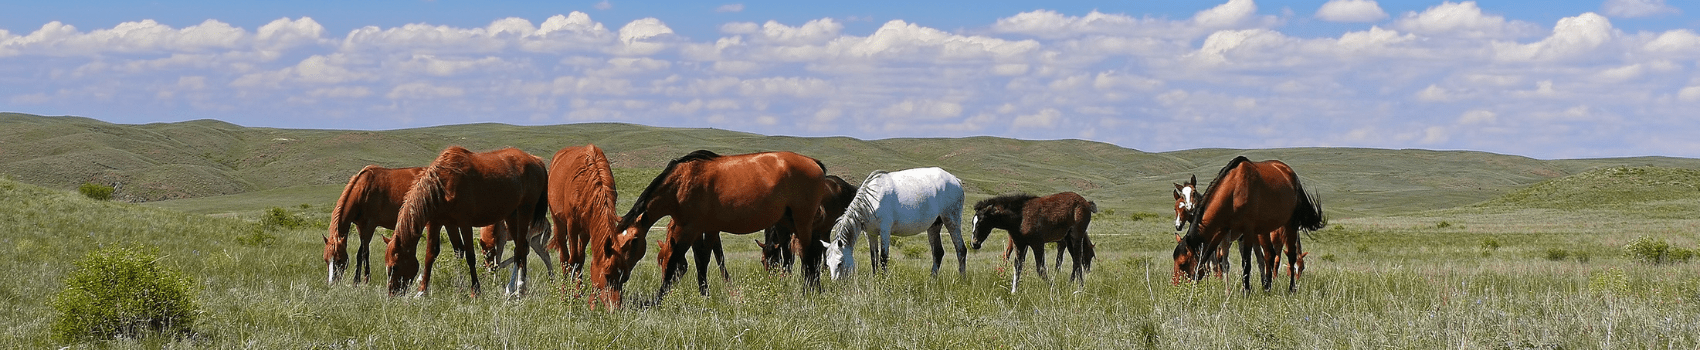 Horses in Northern Wisconsin